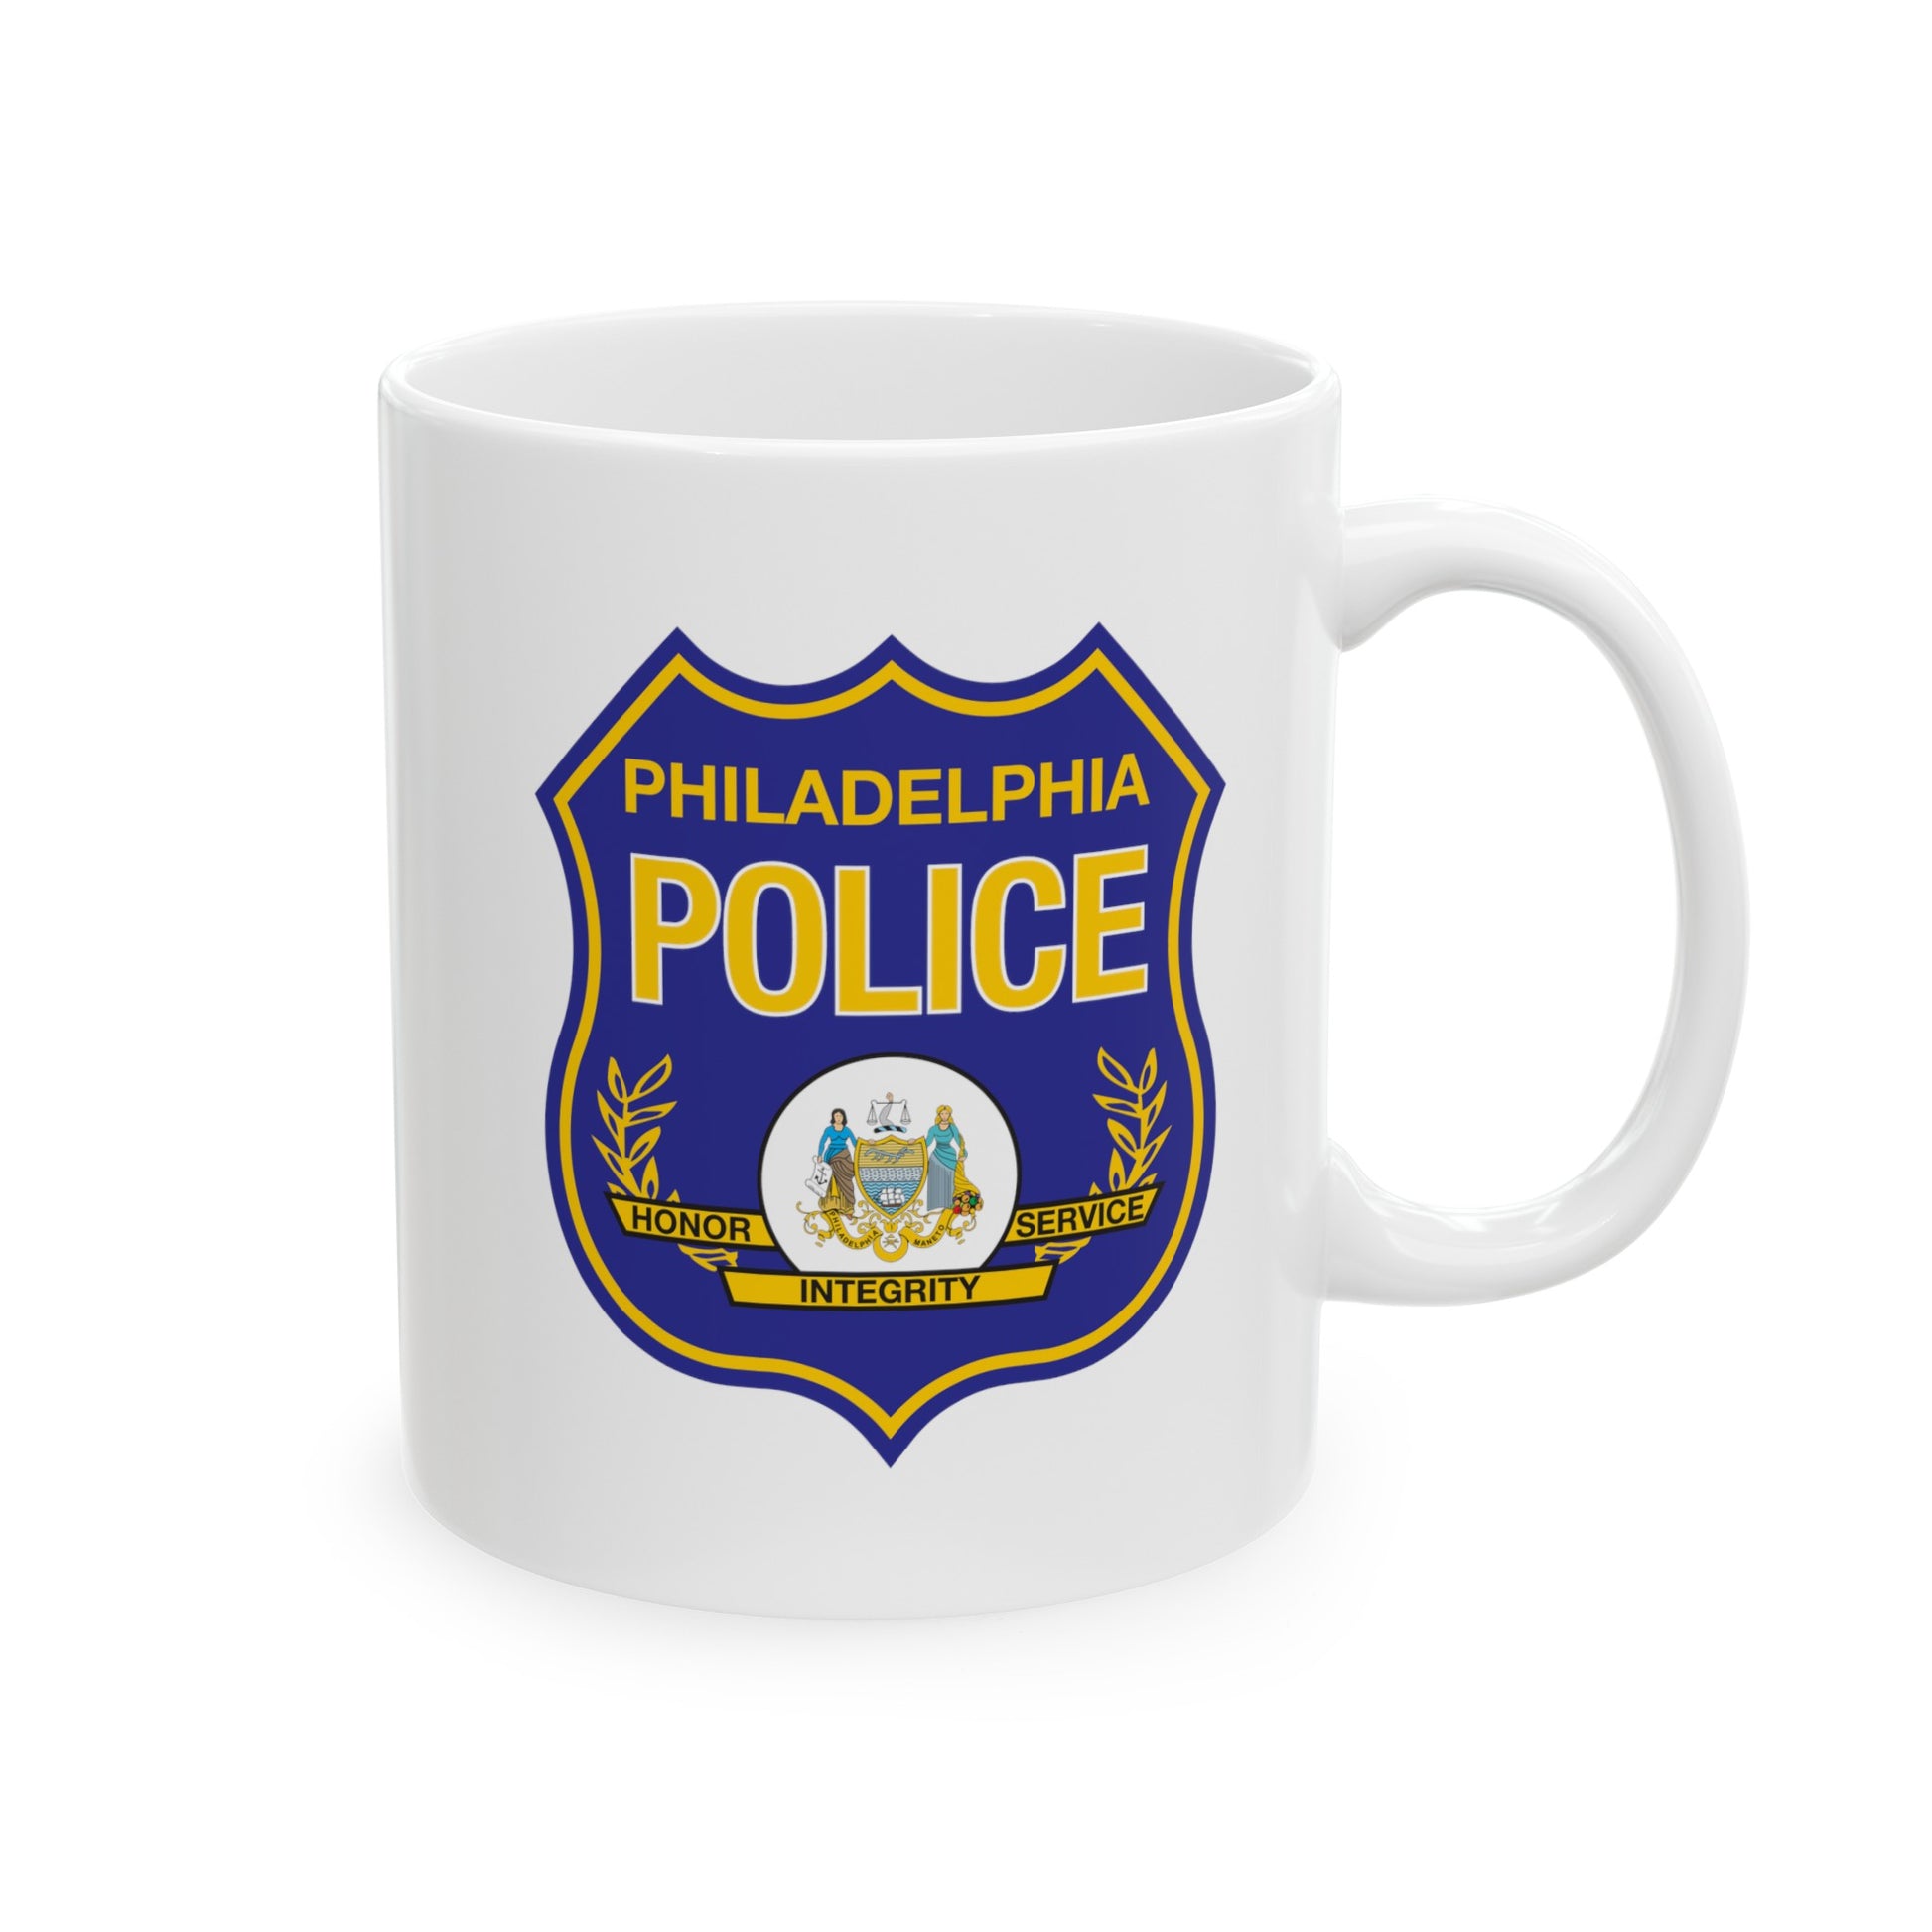 Philadelphia Police Coffee Mug - Double Sided White Ceramic 11oz by TheGlassyLass.com